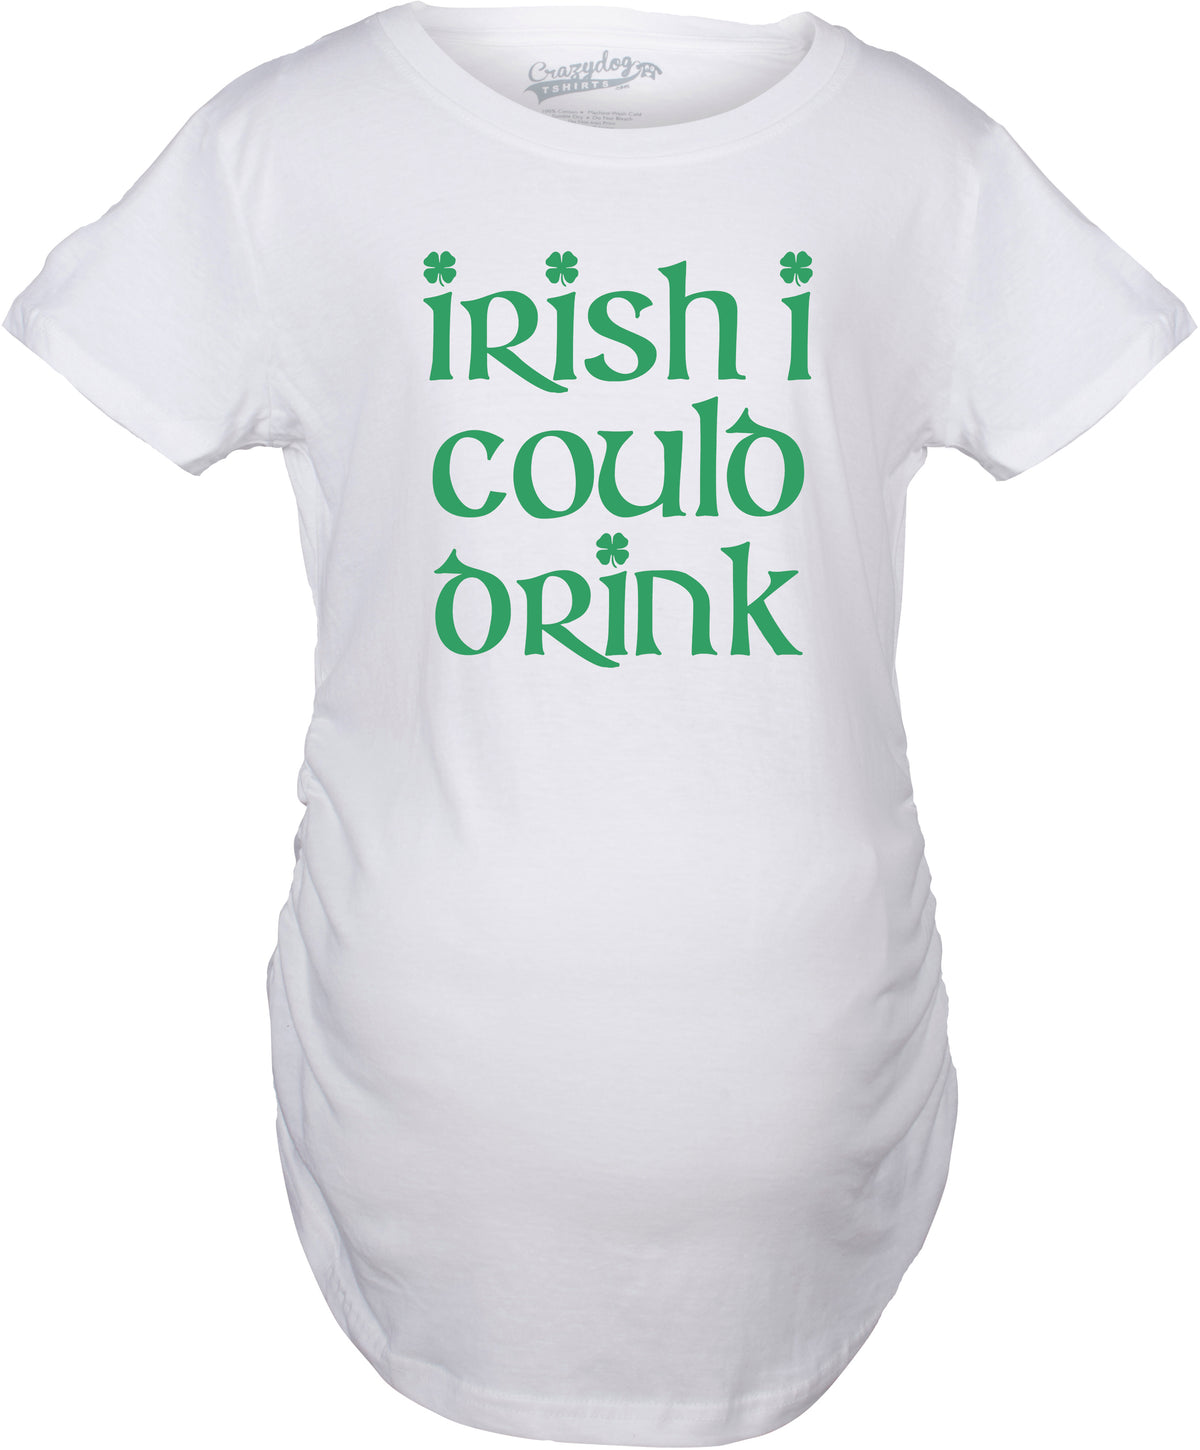 Funny White Irish I Could Drink Maternity T Shirt Nerdy Saint Patrick&#39;s Day Tee